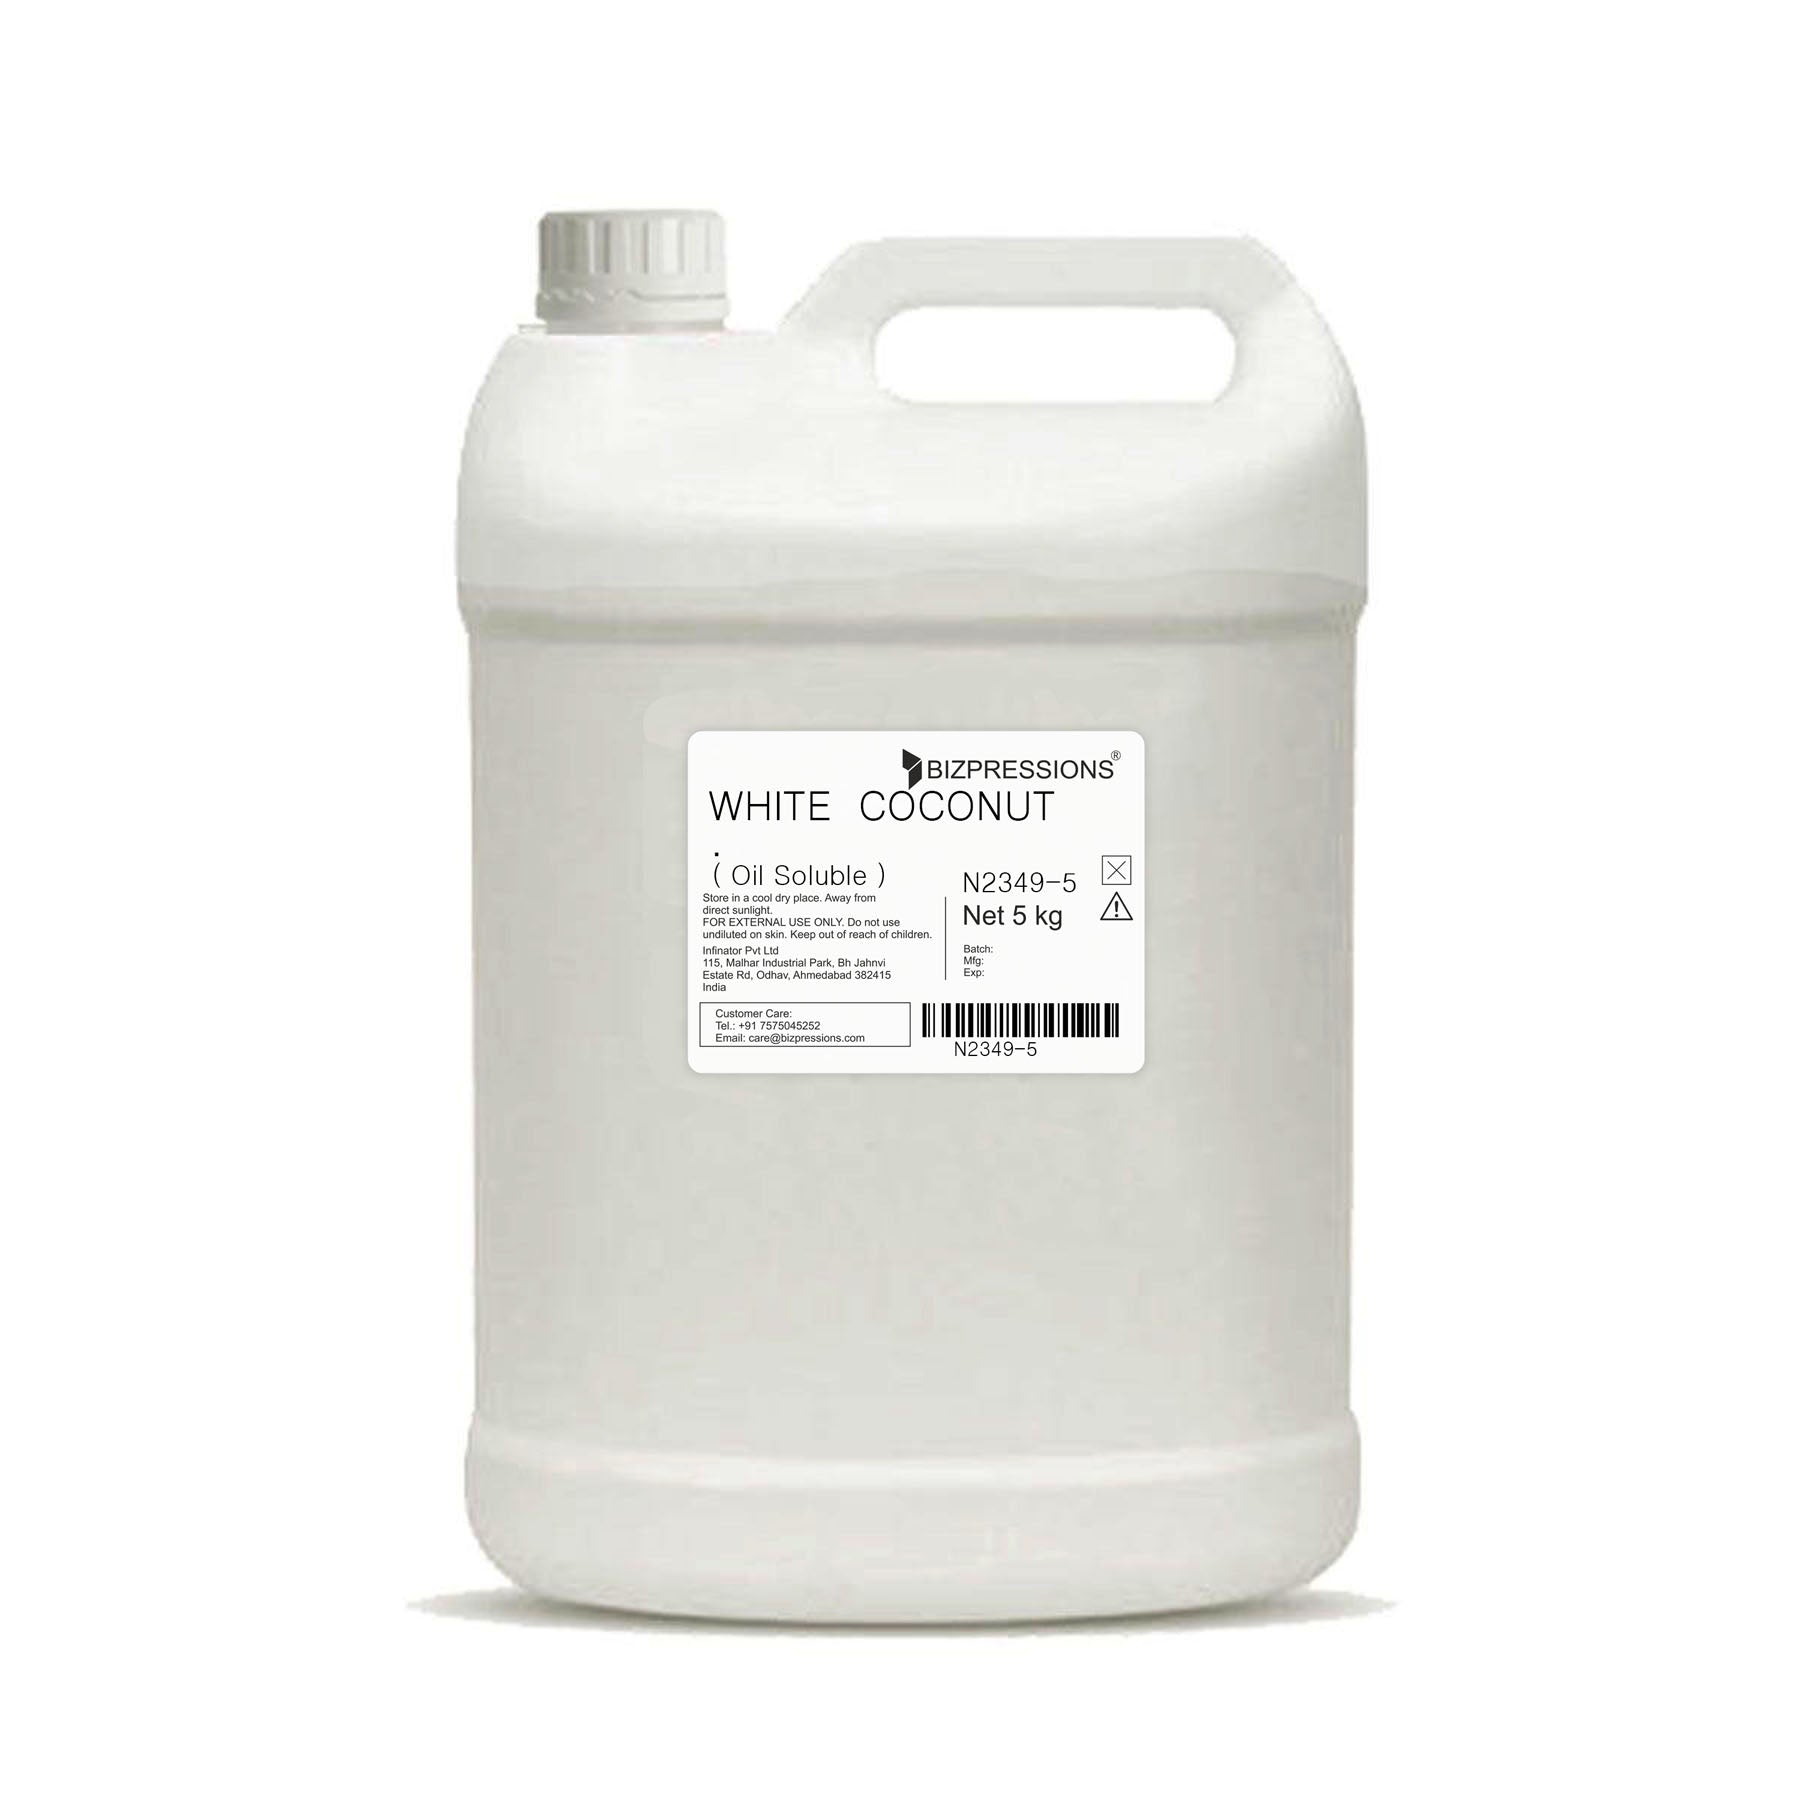 WHITE COCONUT - Fragrance ( Oil Soluble ) - 5 kg